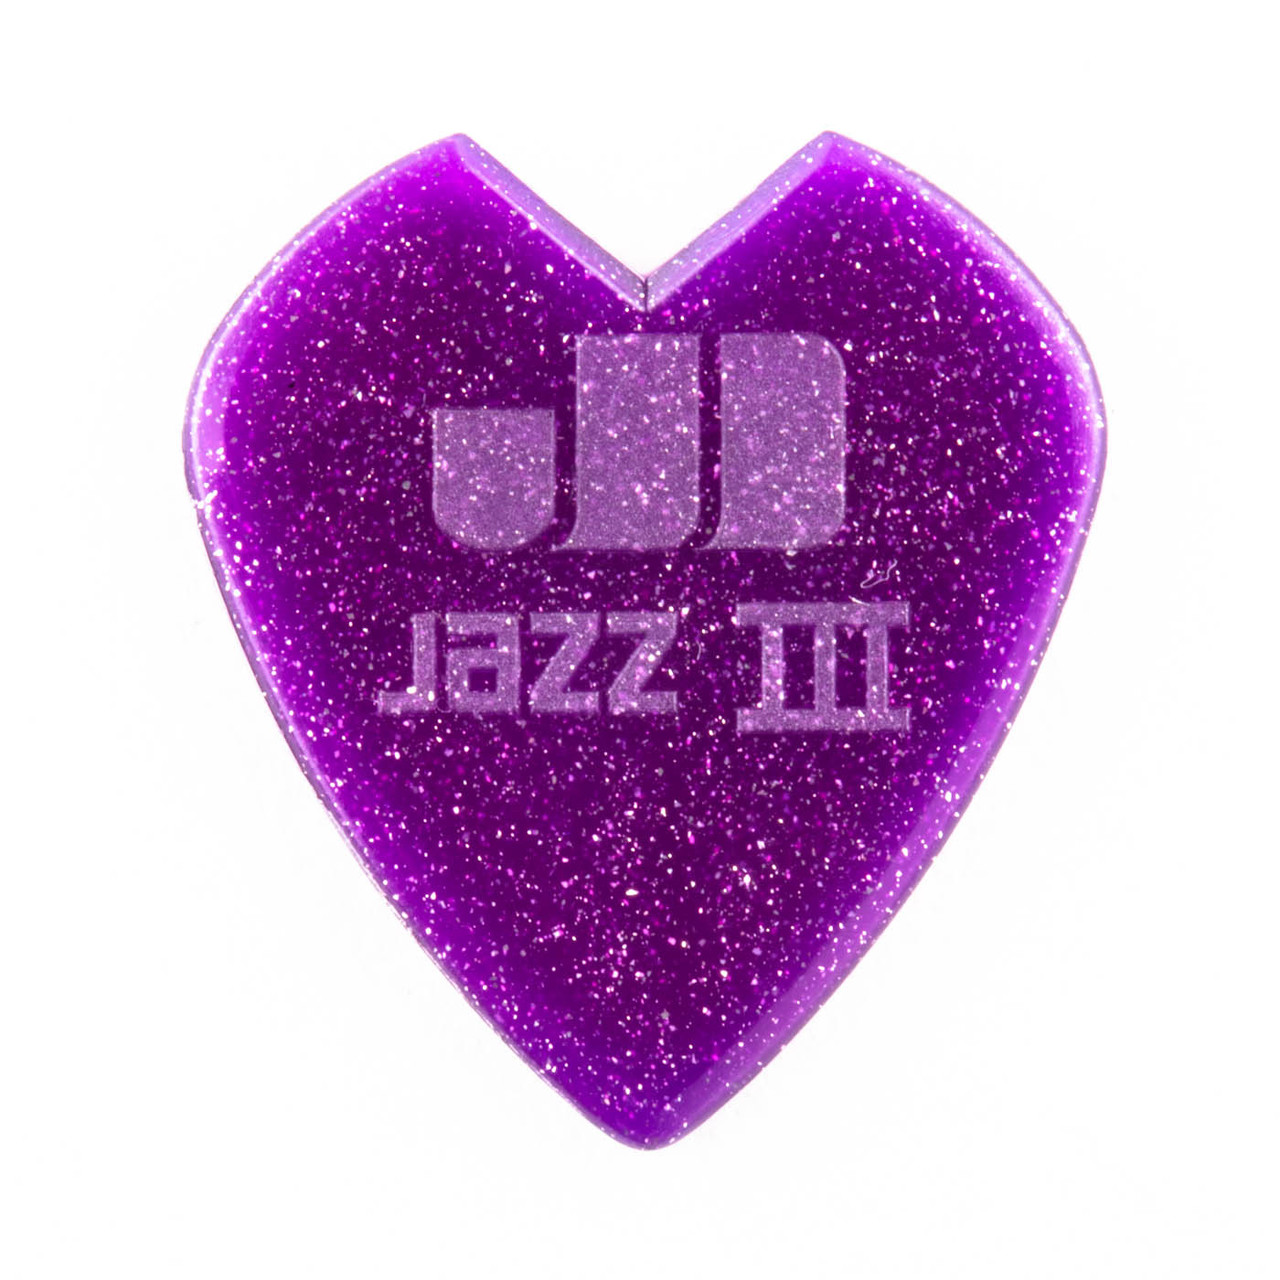 Jim Dunlop Kirk Hammett Jazz Iii Pick Purple Sparkle X24 - Plectrum - Variation 3